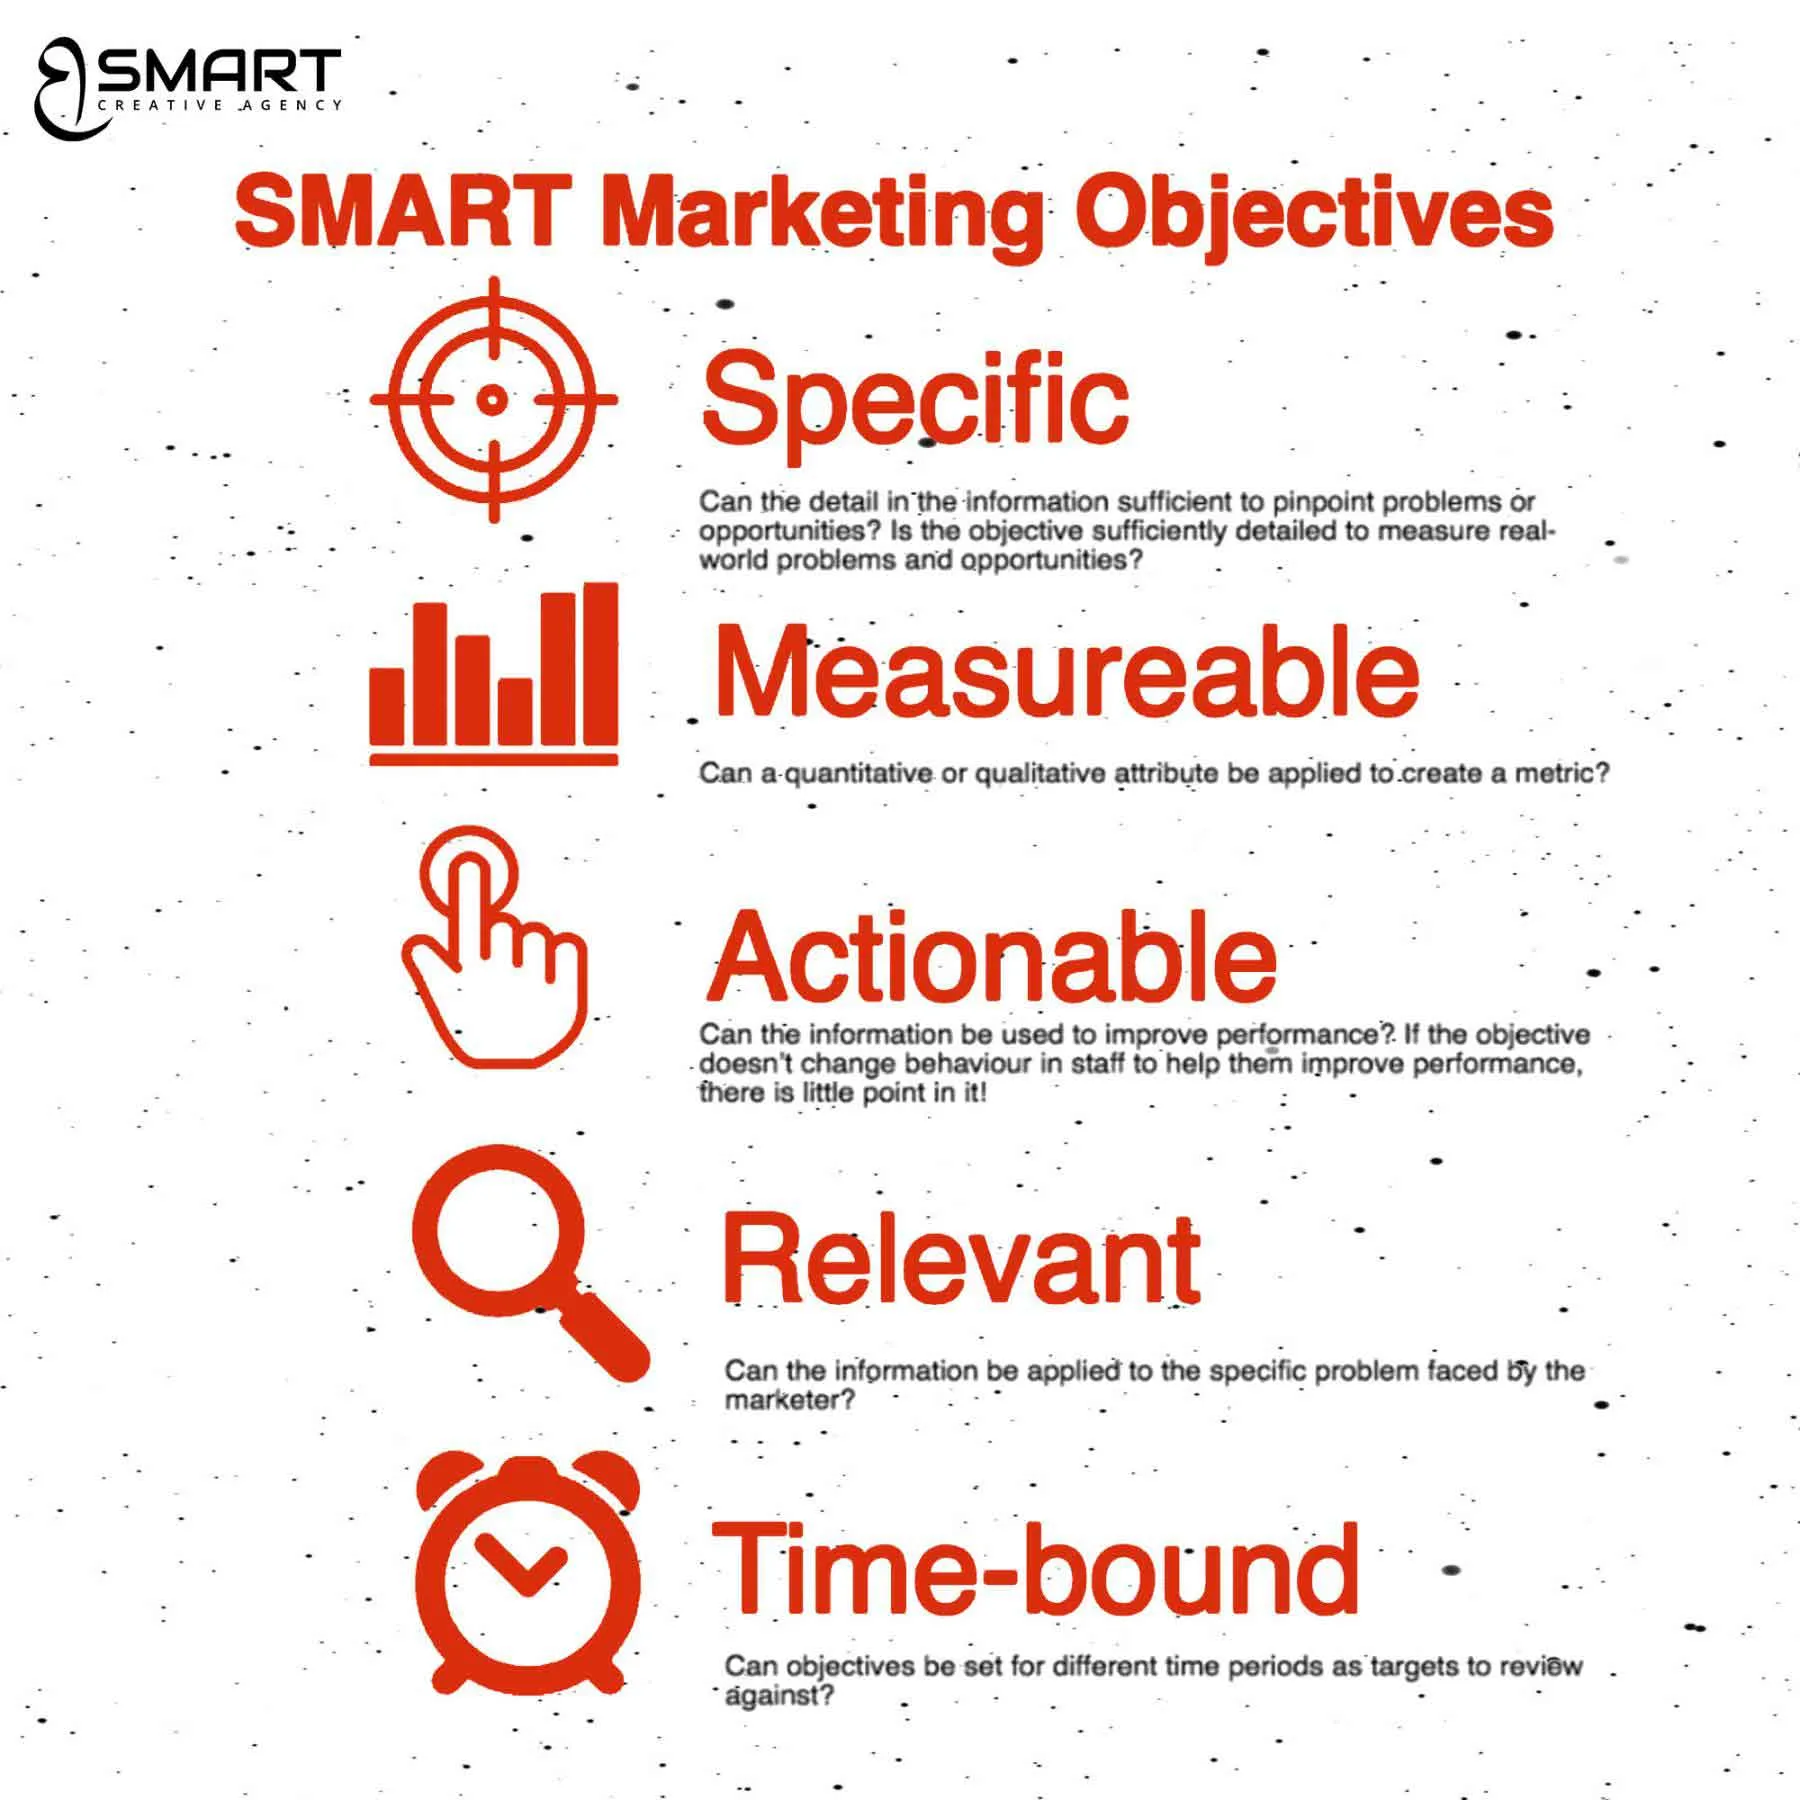 SMART Marketing Objectives